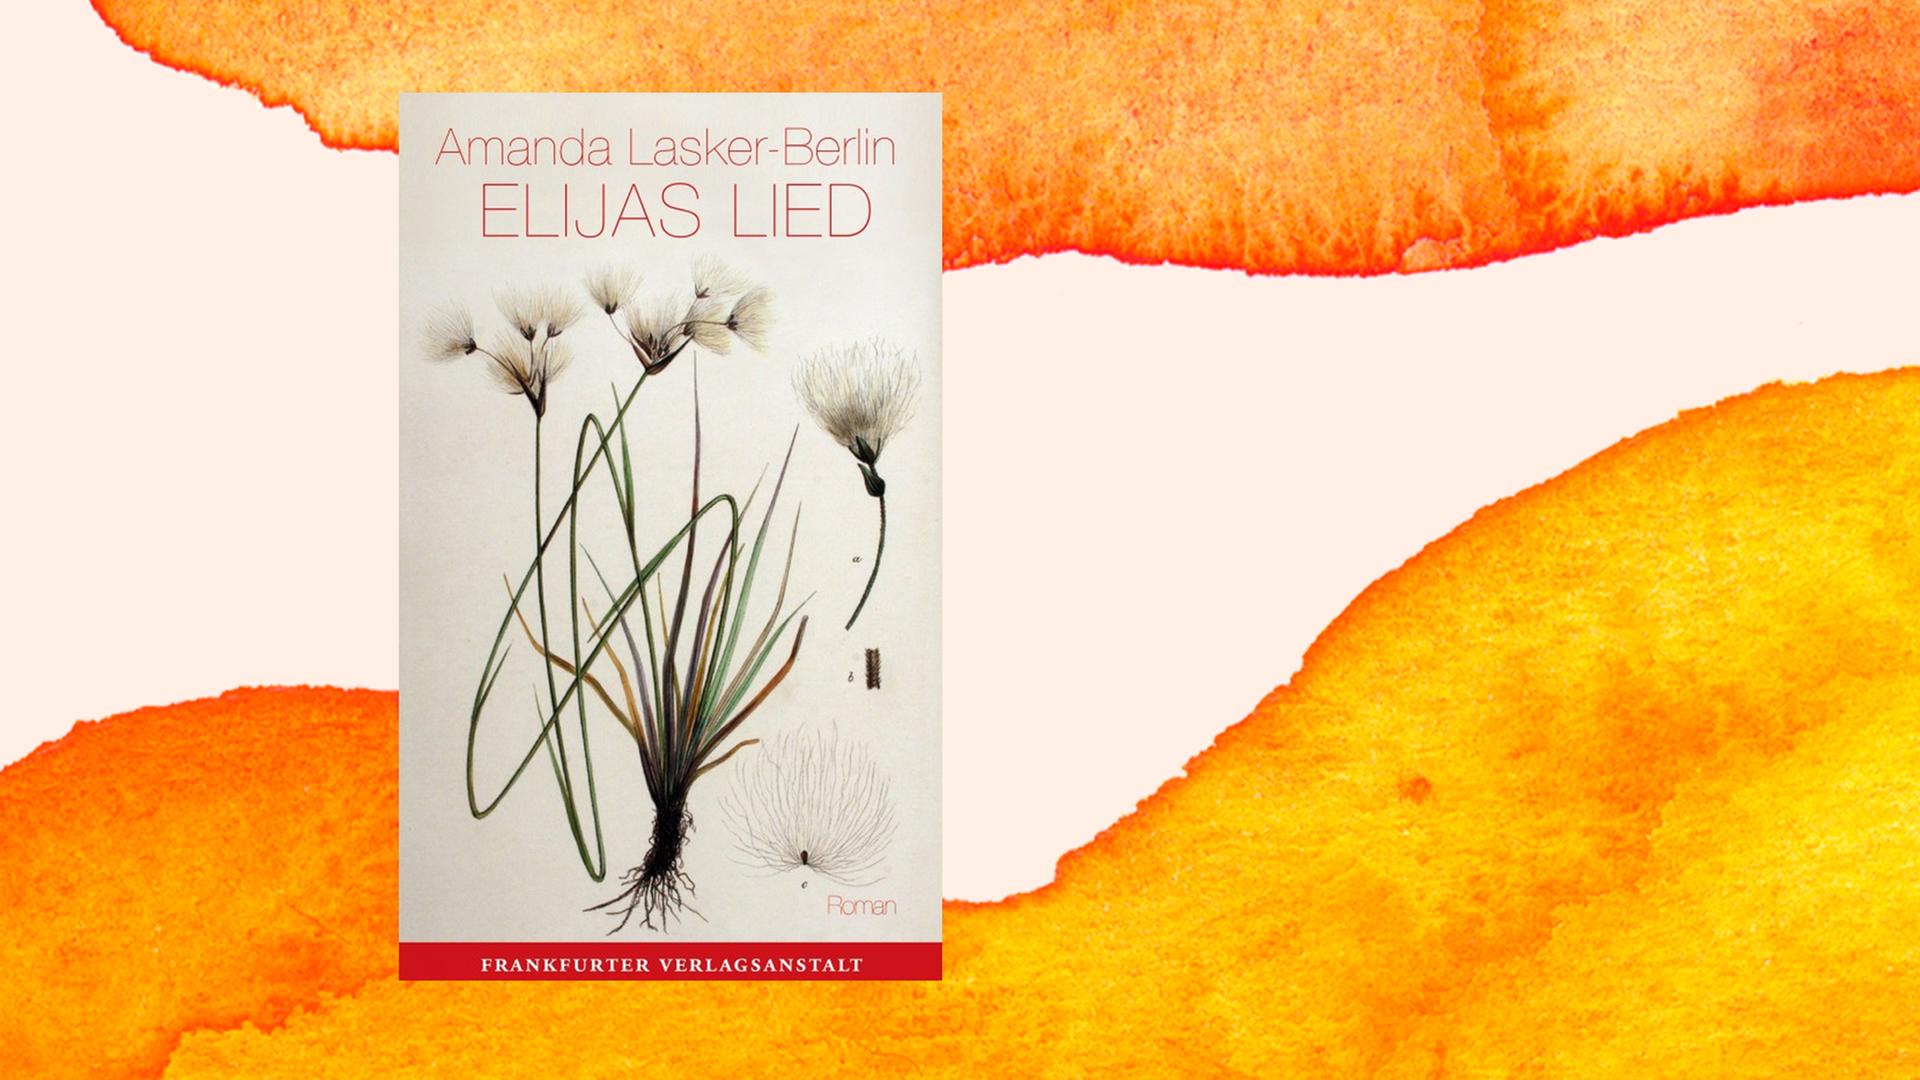 Das Buchcover zu Amanda Lasker-Berlin: "Elijas Lied"